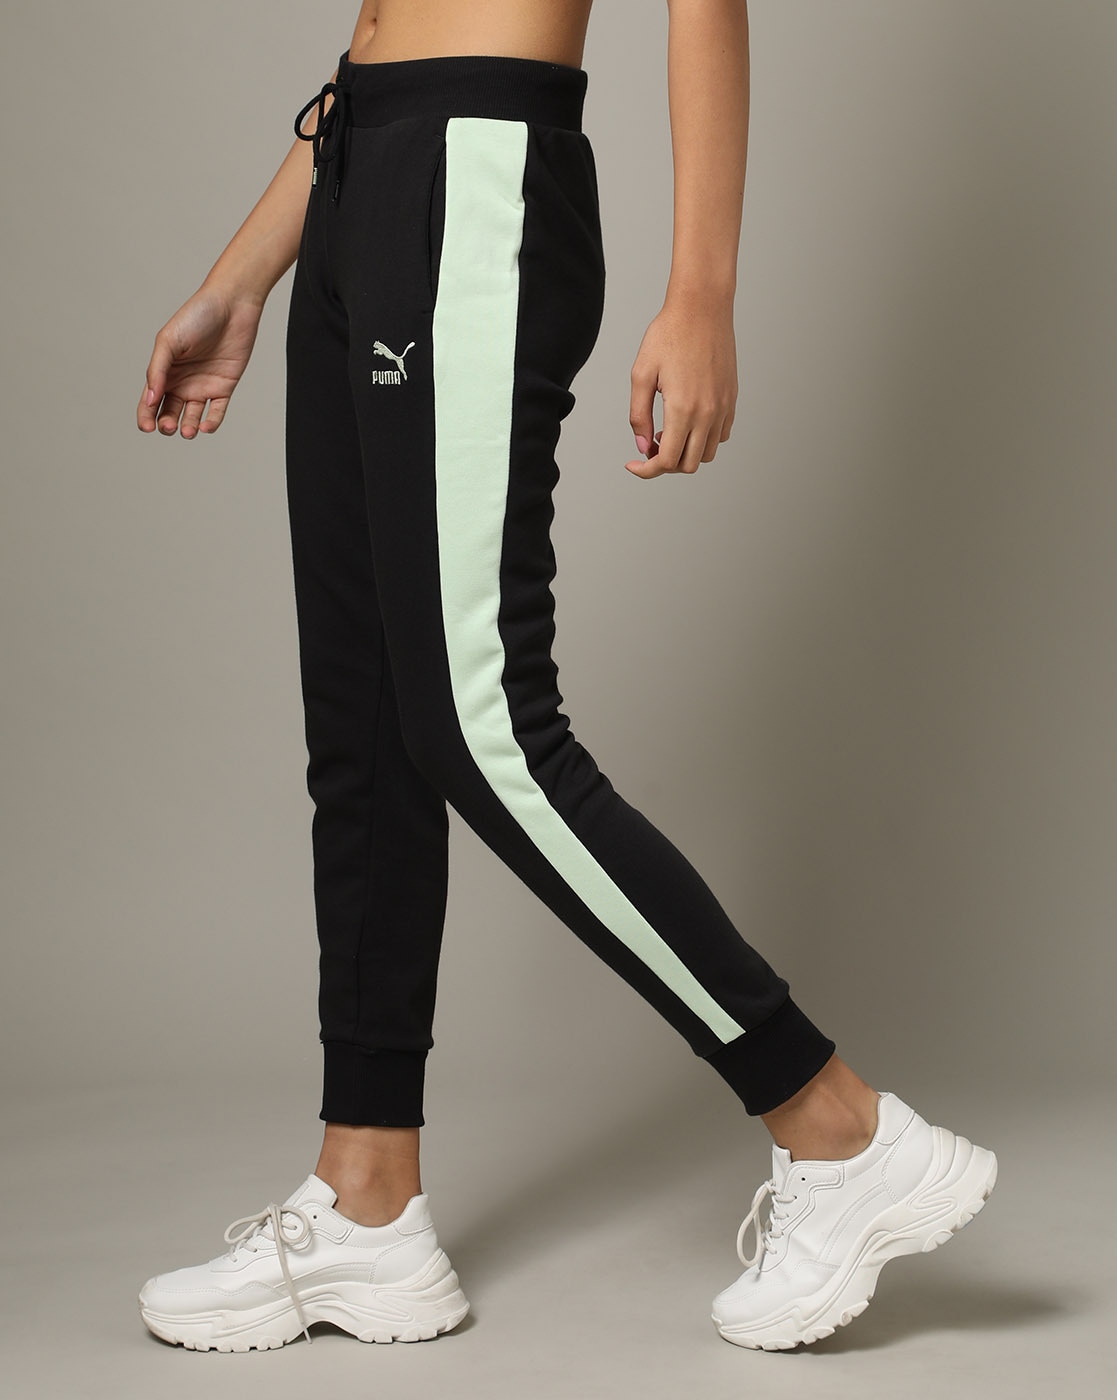 Puma track pants | Gym shorts womens, Pants, Clothes design